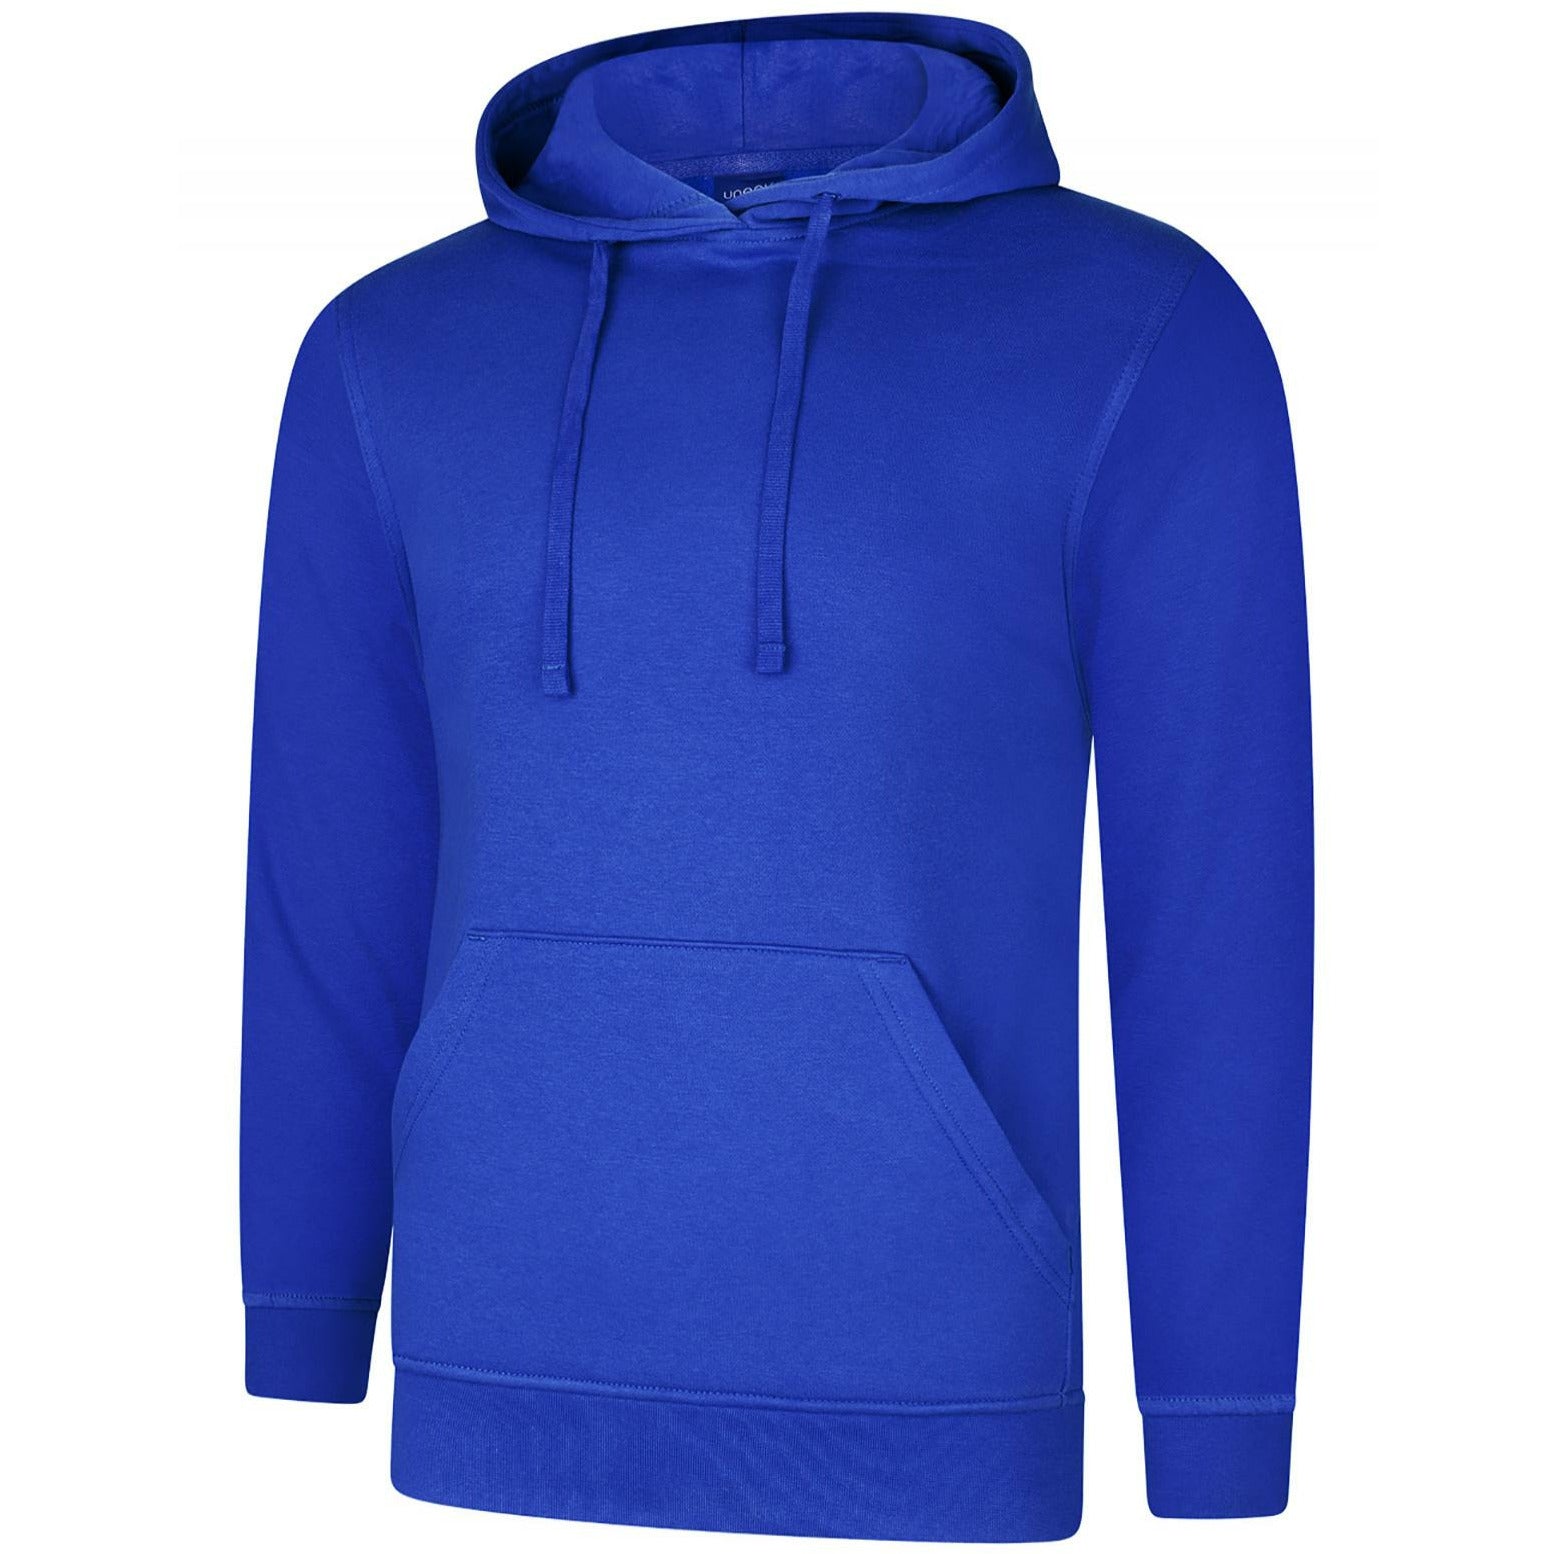 Deluxe Hooded Sweatshirt (XS - M) Royal Blue